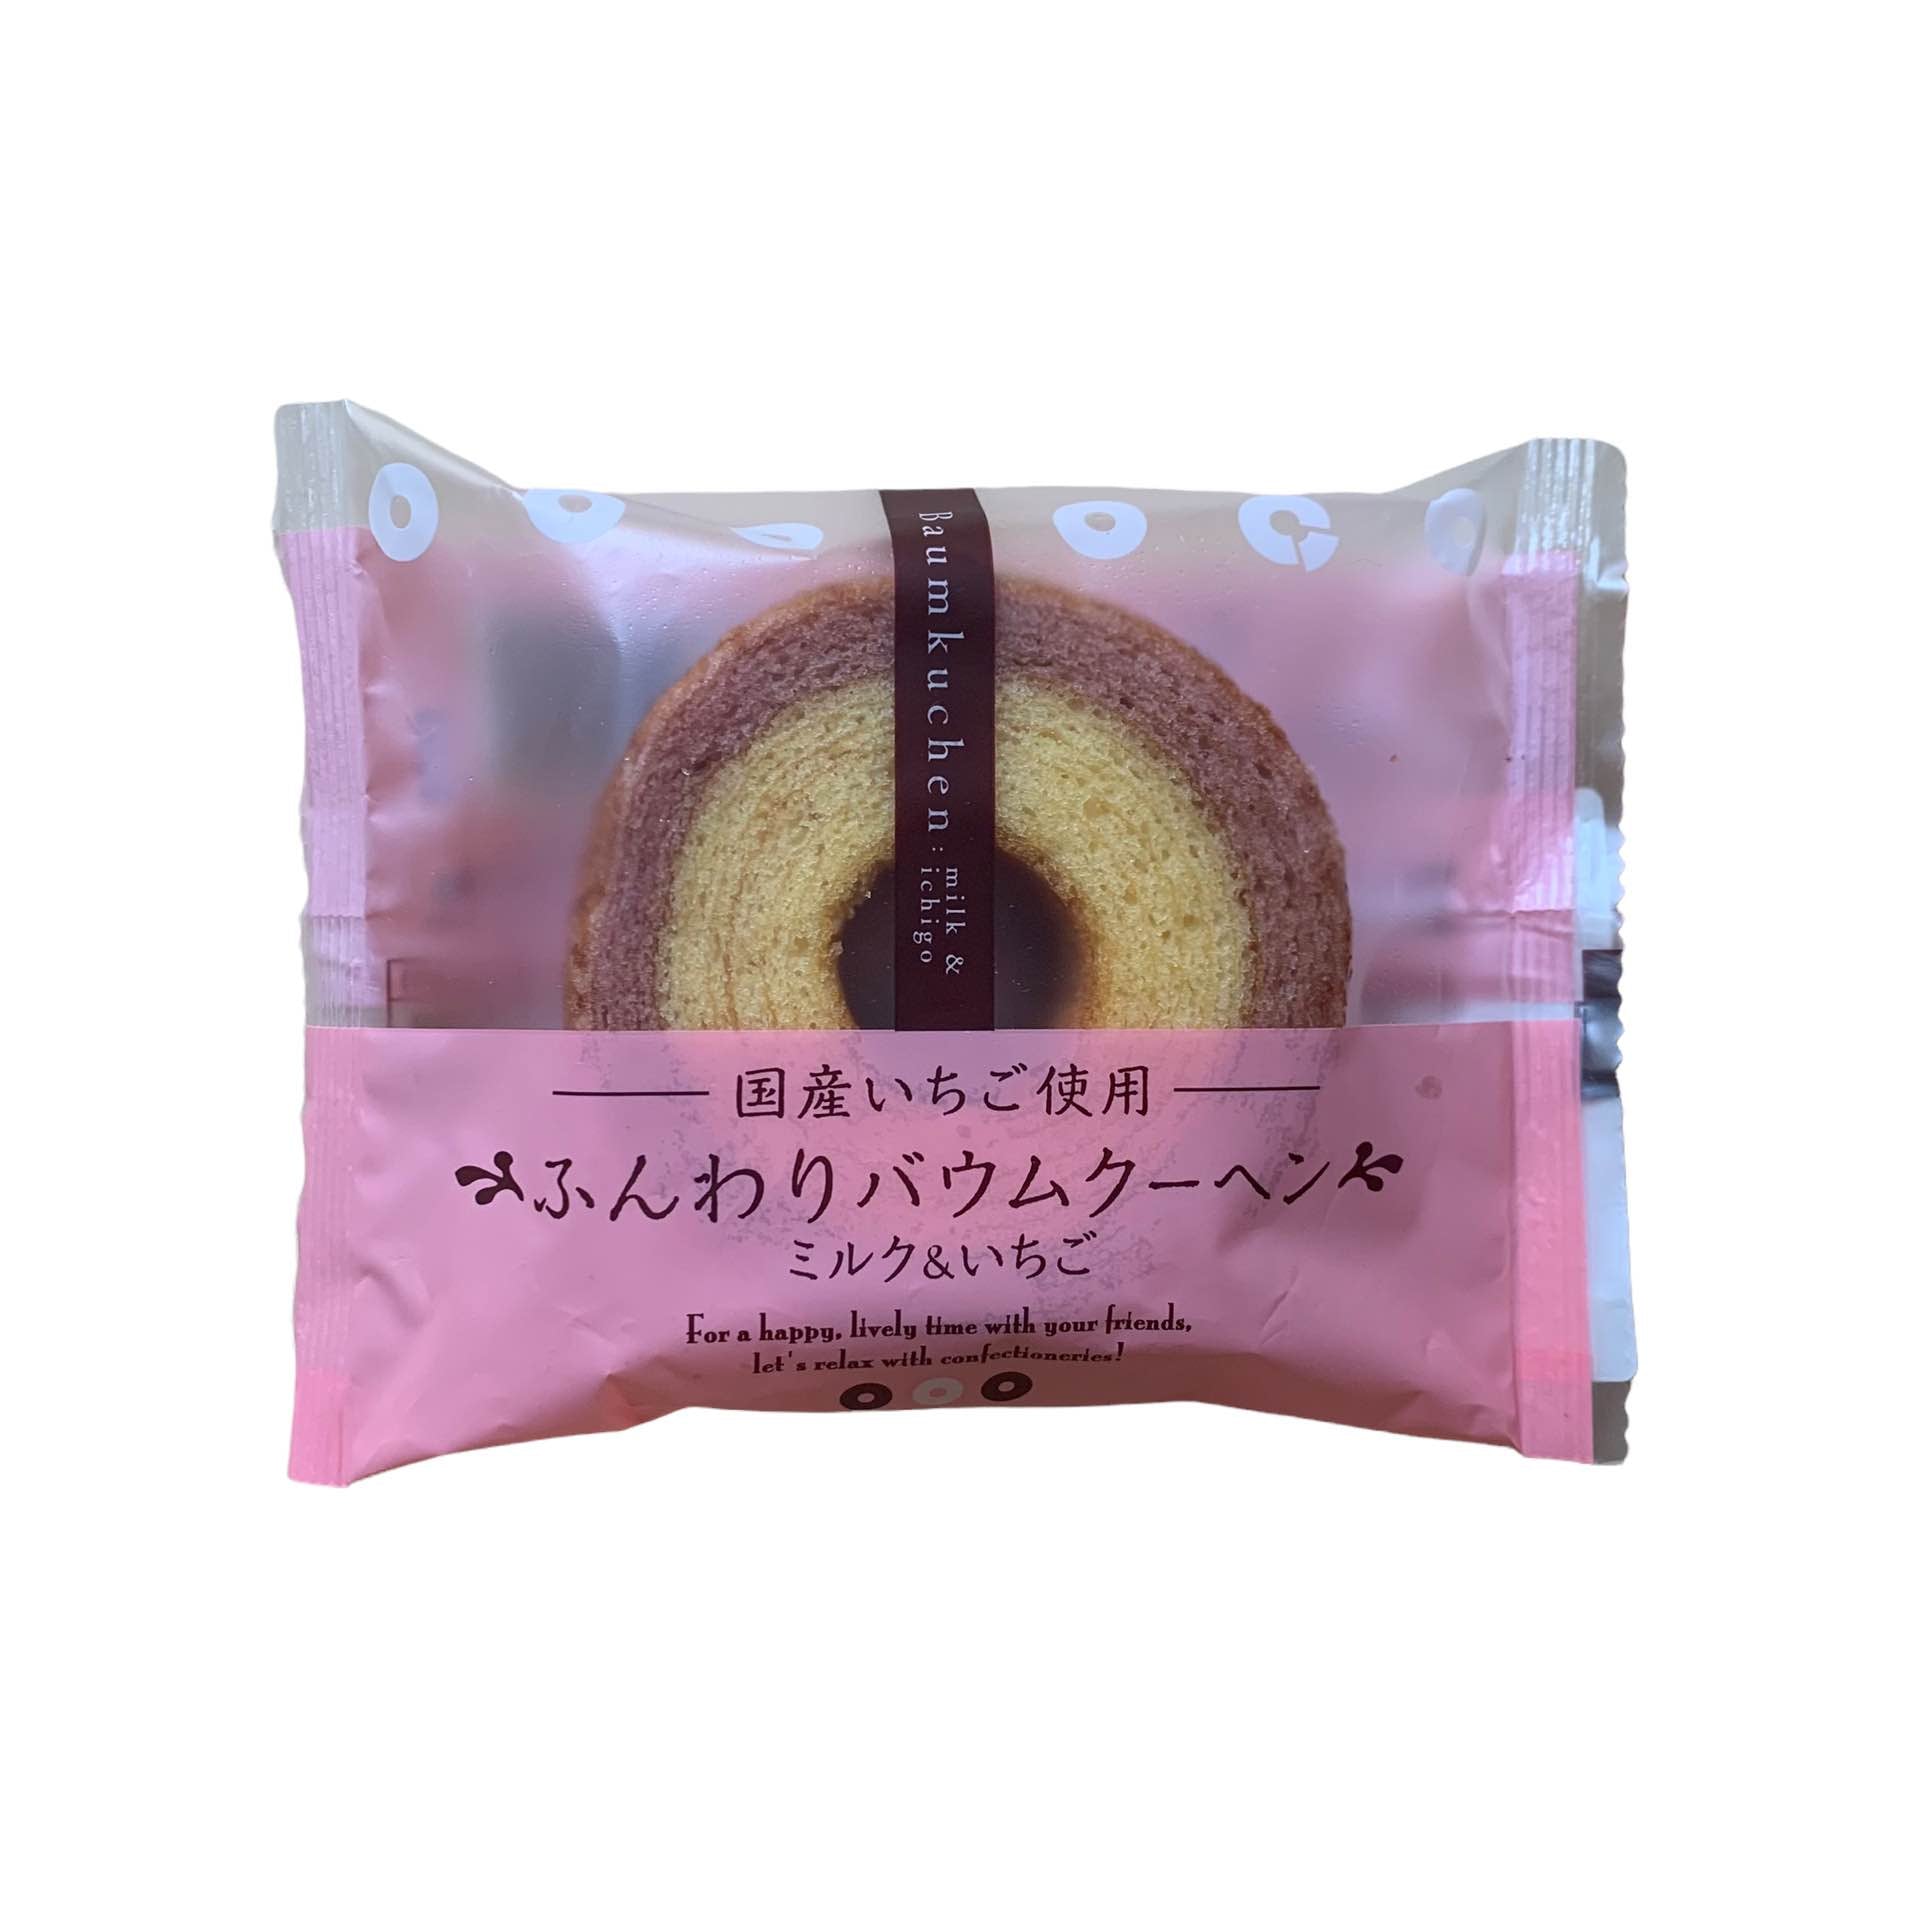 Japanese Bamkuchen Cake Milk & Strawberry Flavour 60g - Taiyo